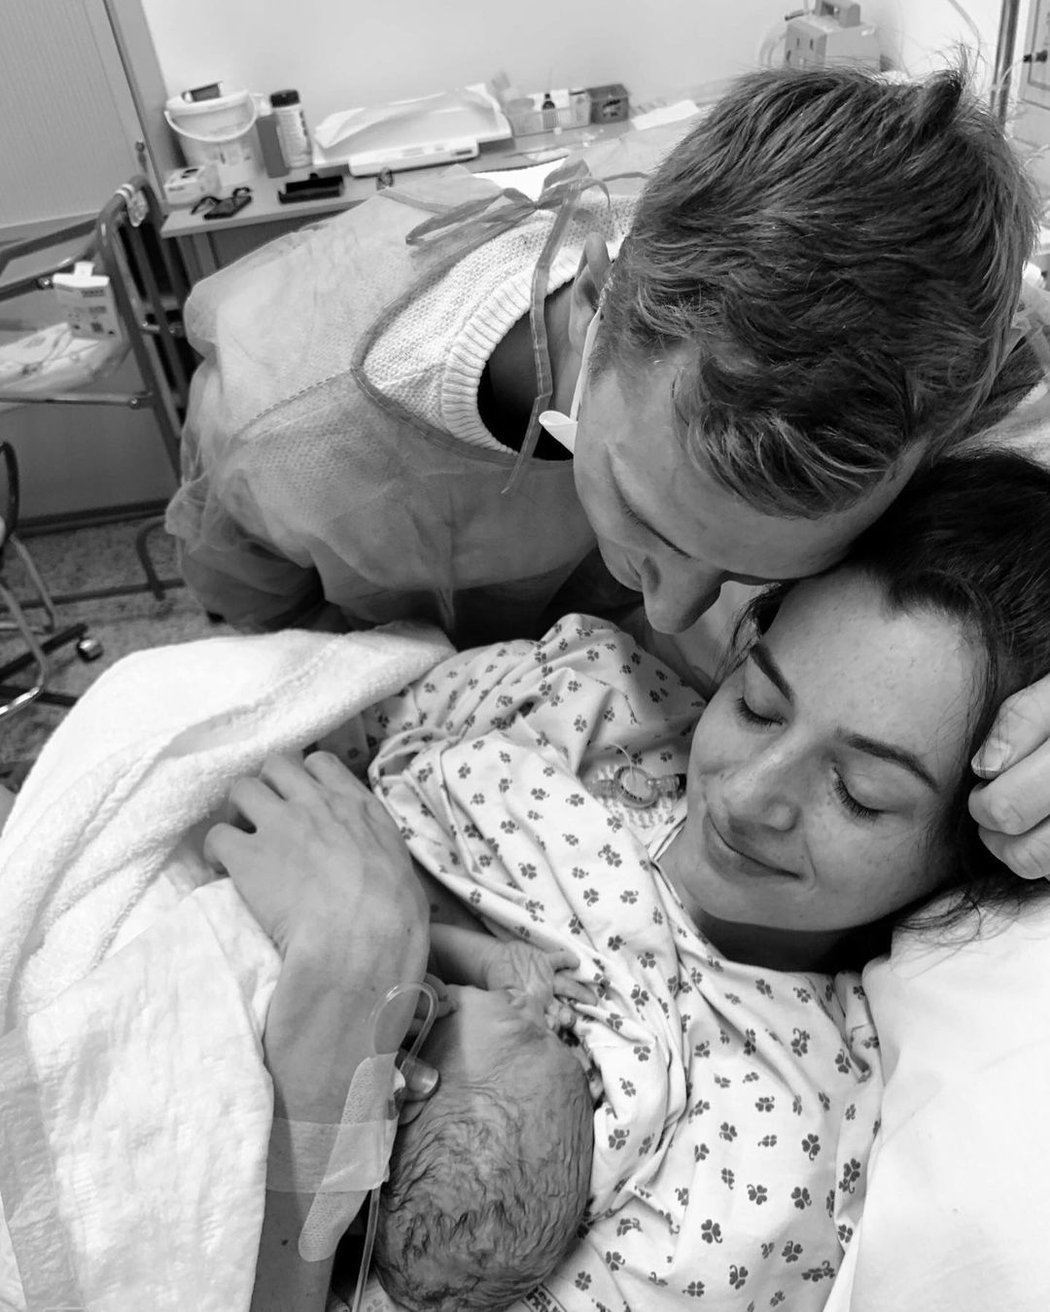 Kristiina Mäki se narozením syna pochlubila na Instagramu